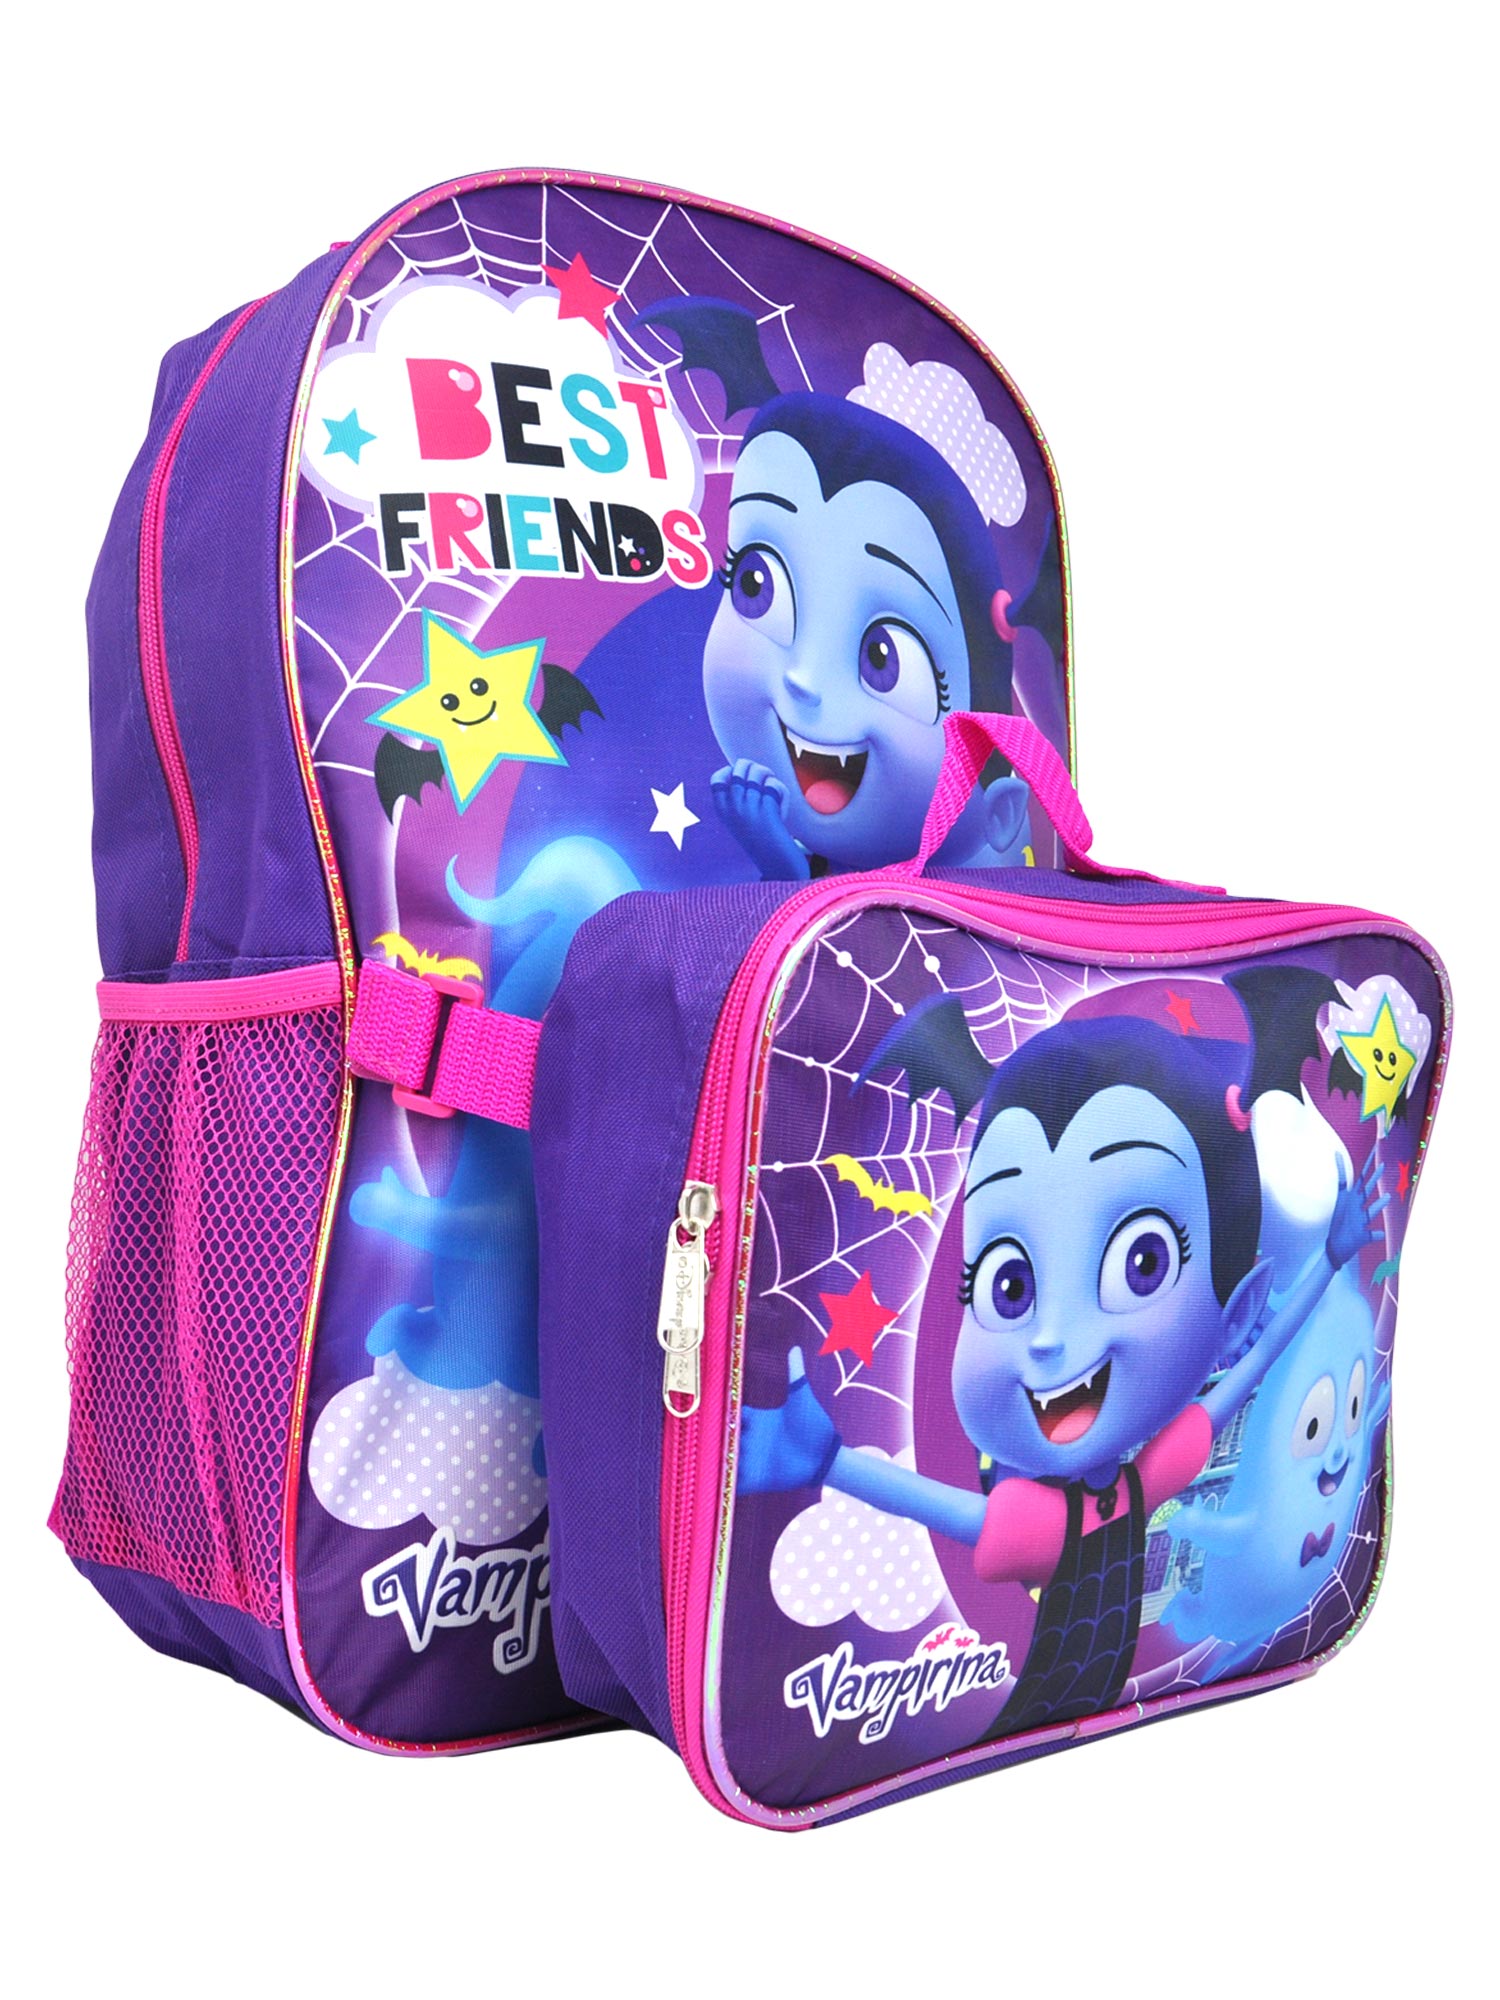 Girls Vampirina Best Friends Backpack 16" w/ Detachable Lunch Bag Purple - image 1 of 6